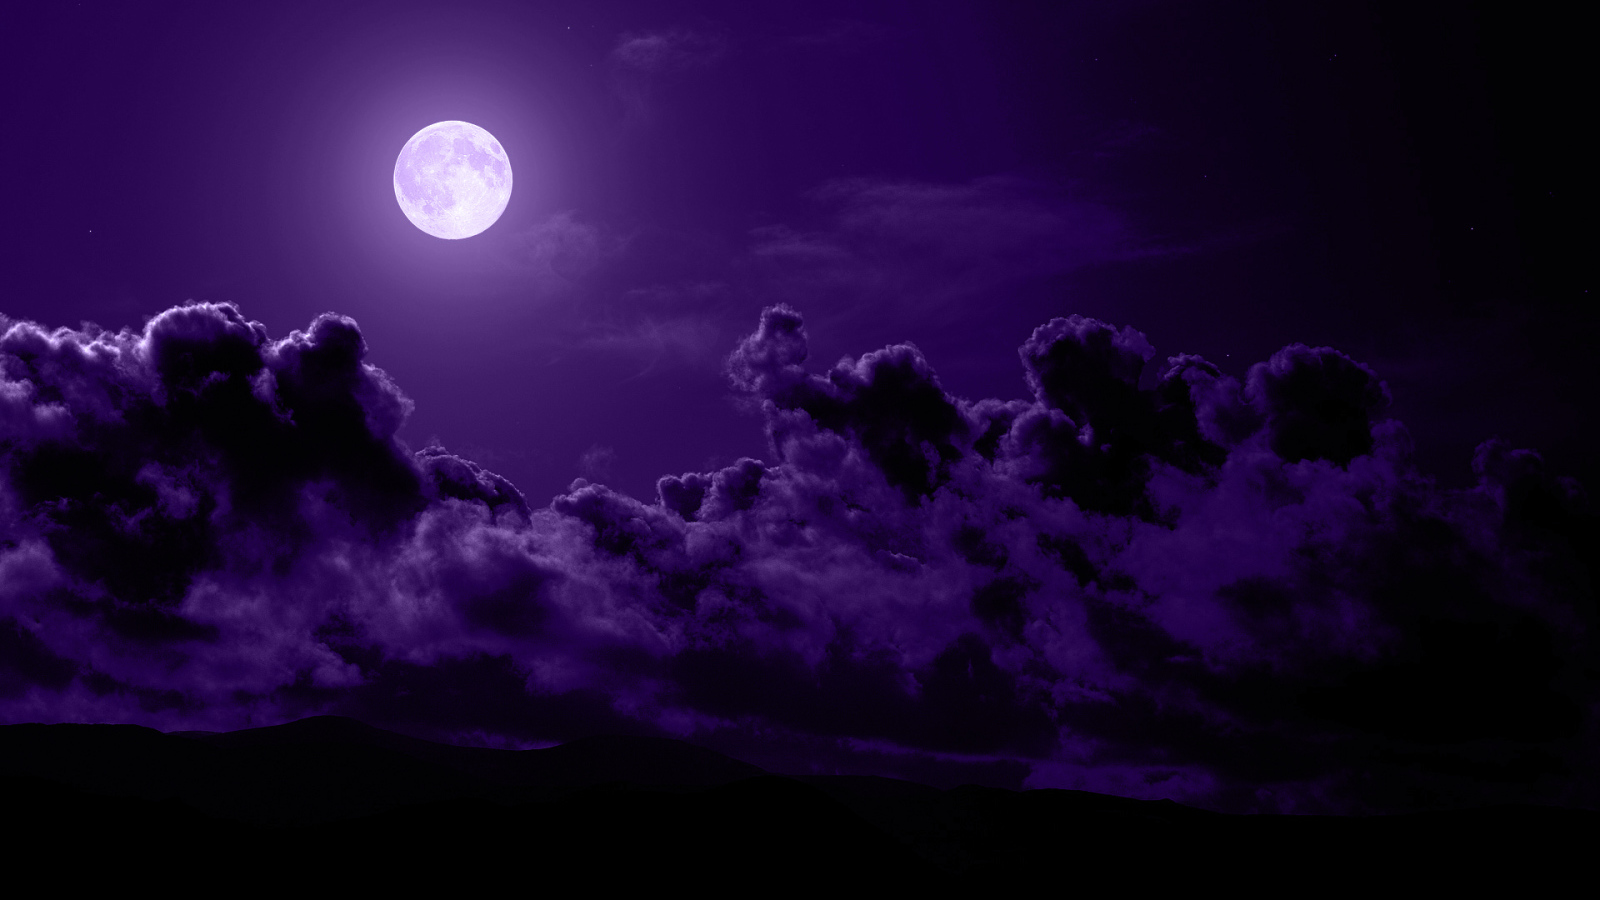 The moon on the purple sky